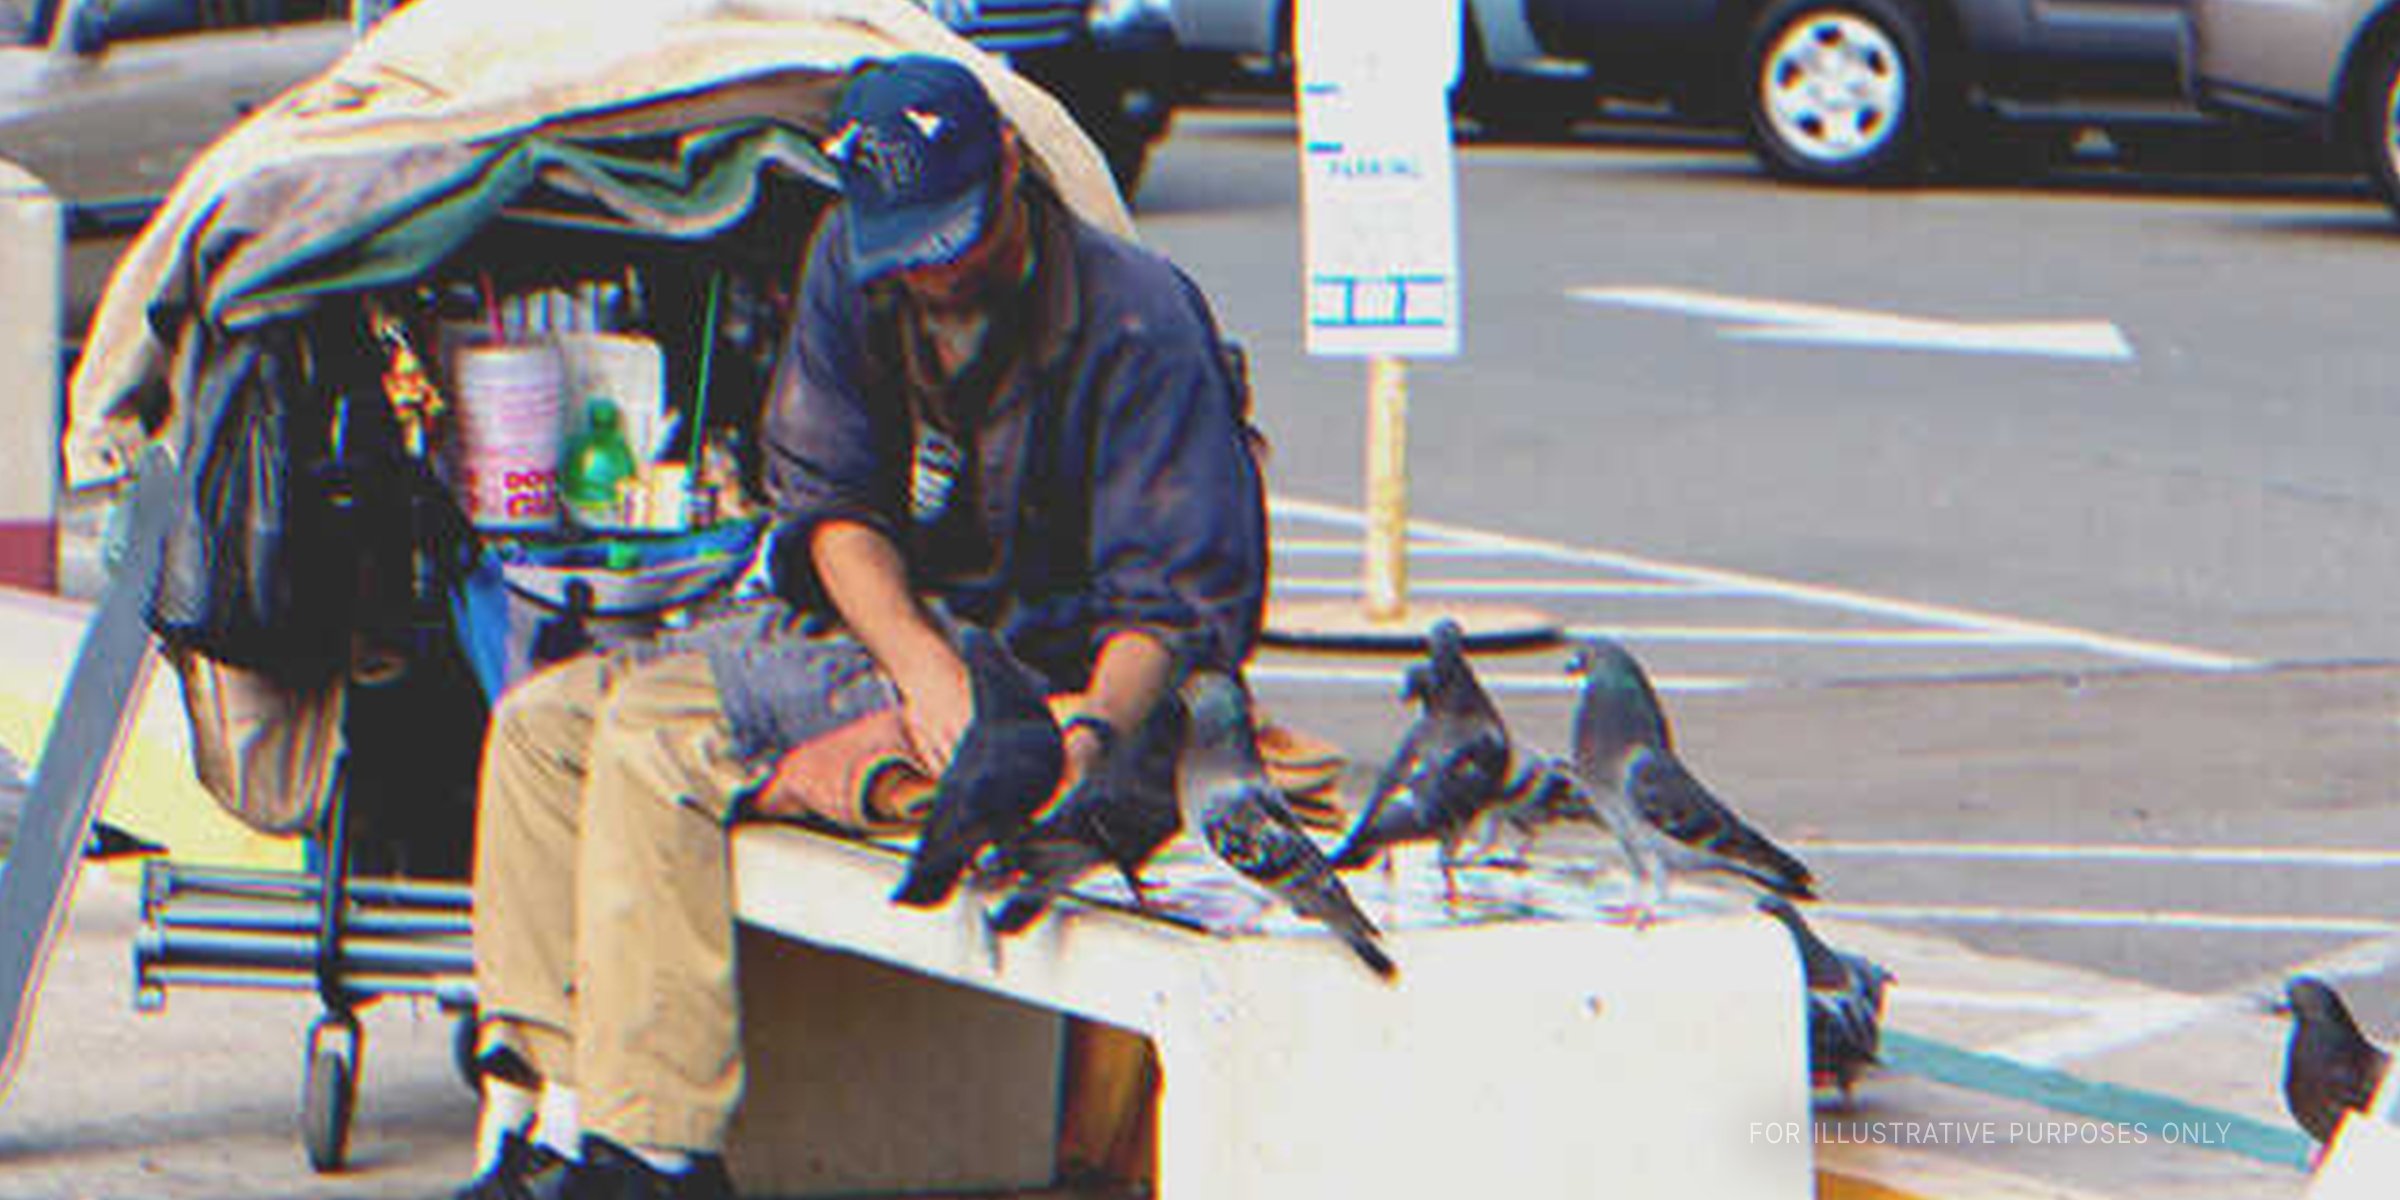 A homeless man sitting on a bench. | Source: Shutterstock